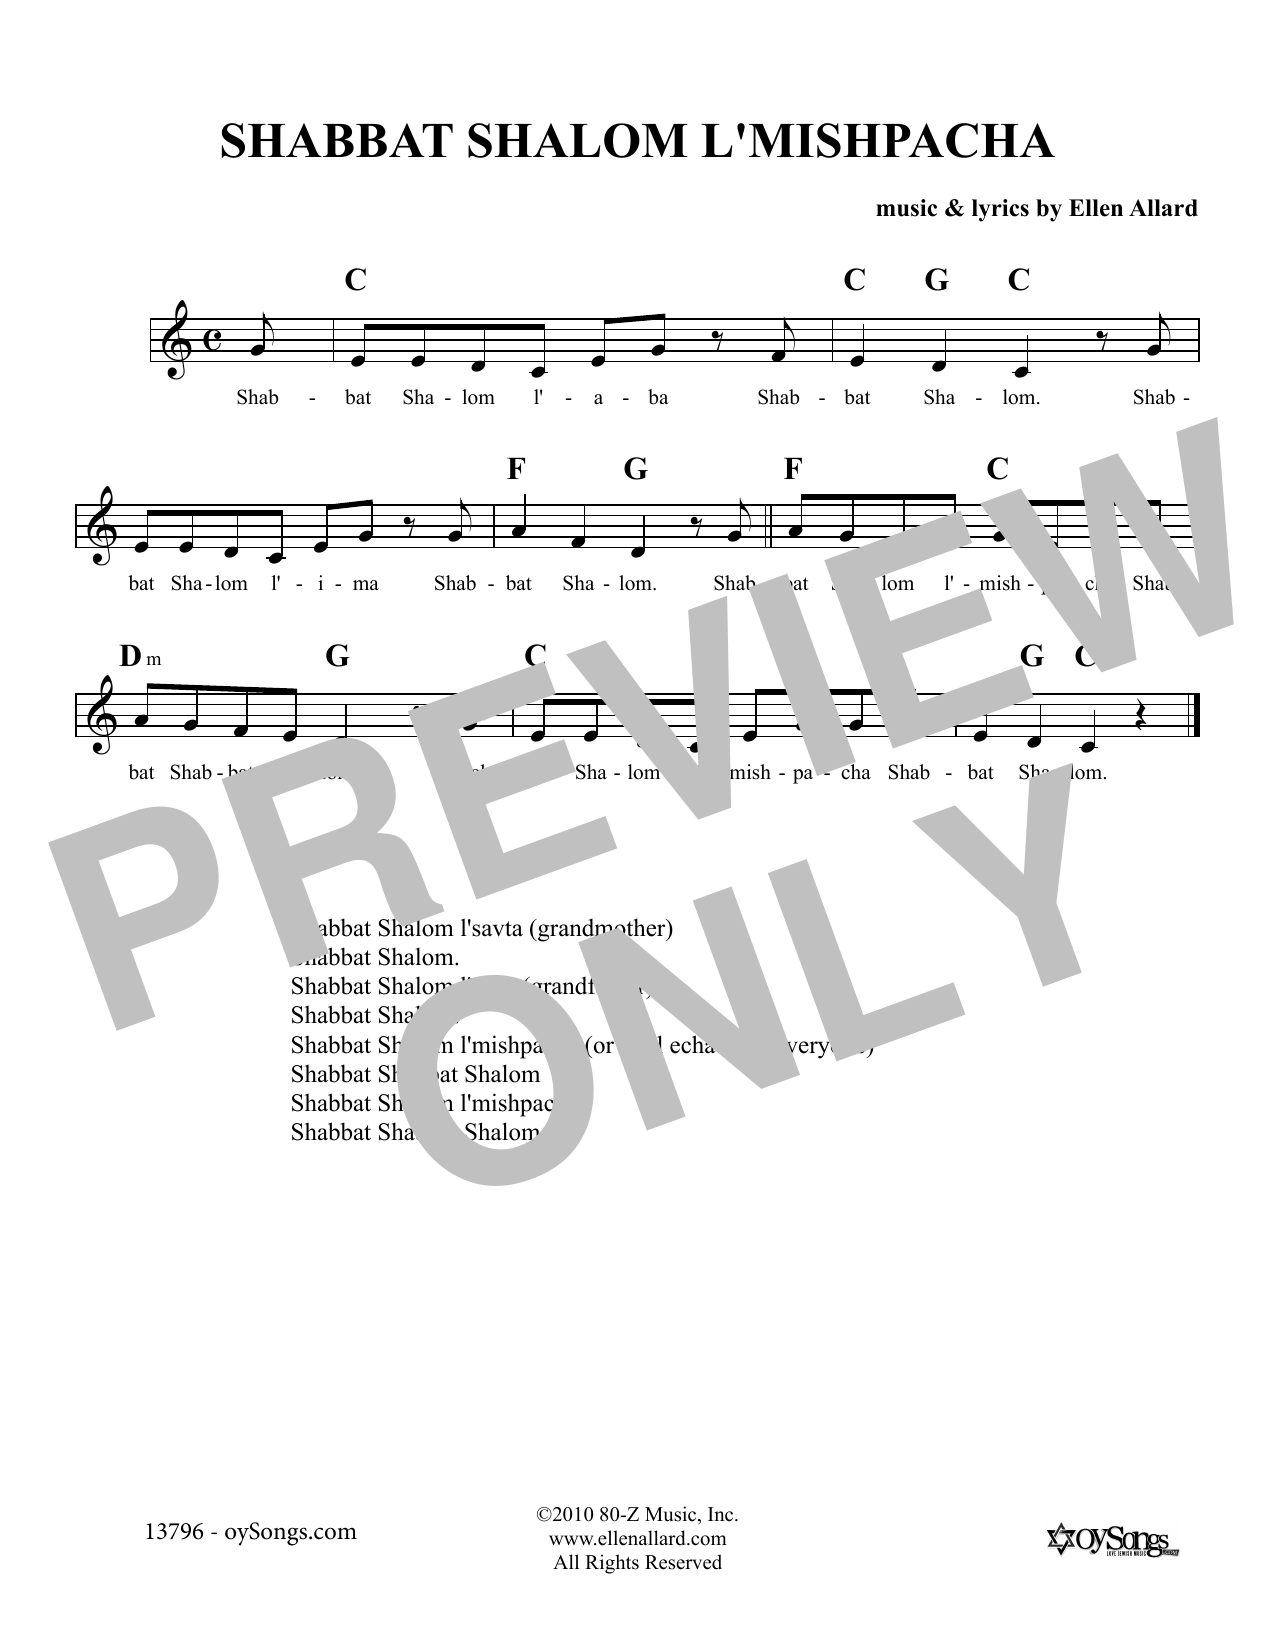 Ellen Allard Shabbat Shalom L'Mishpacha Sheet Music Notes & Chords for Melody Line, Lyrics & Chords - Download or Print PDF